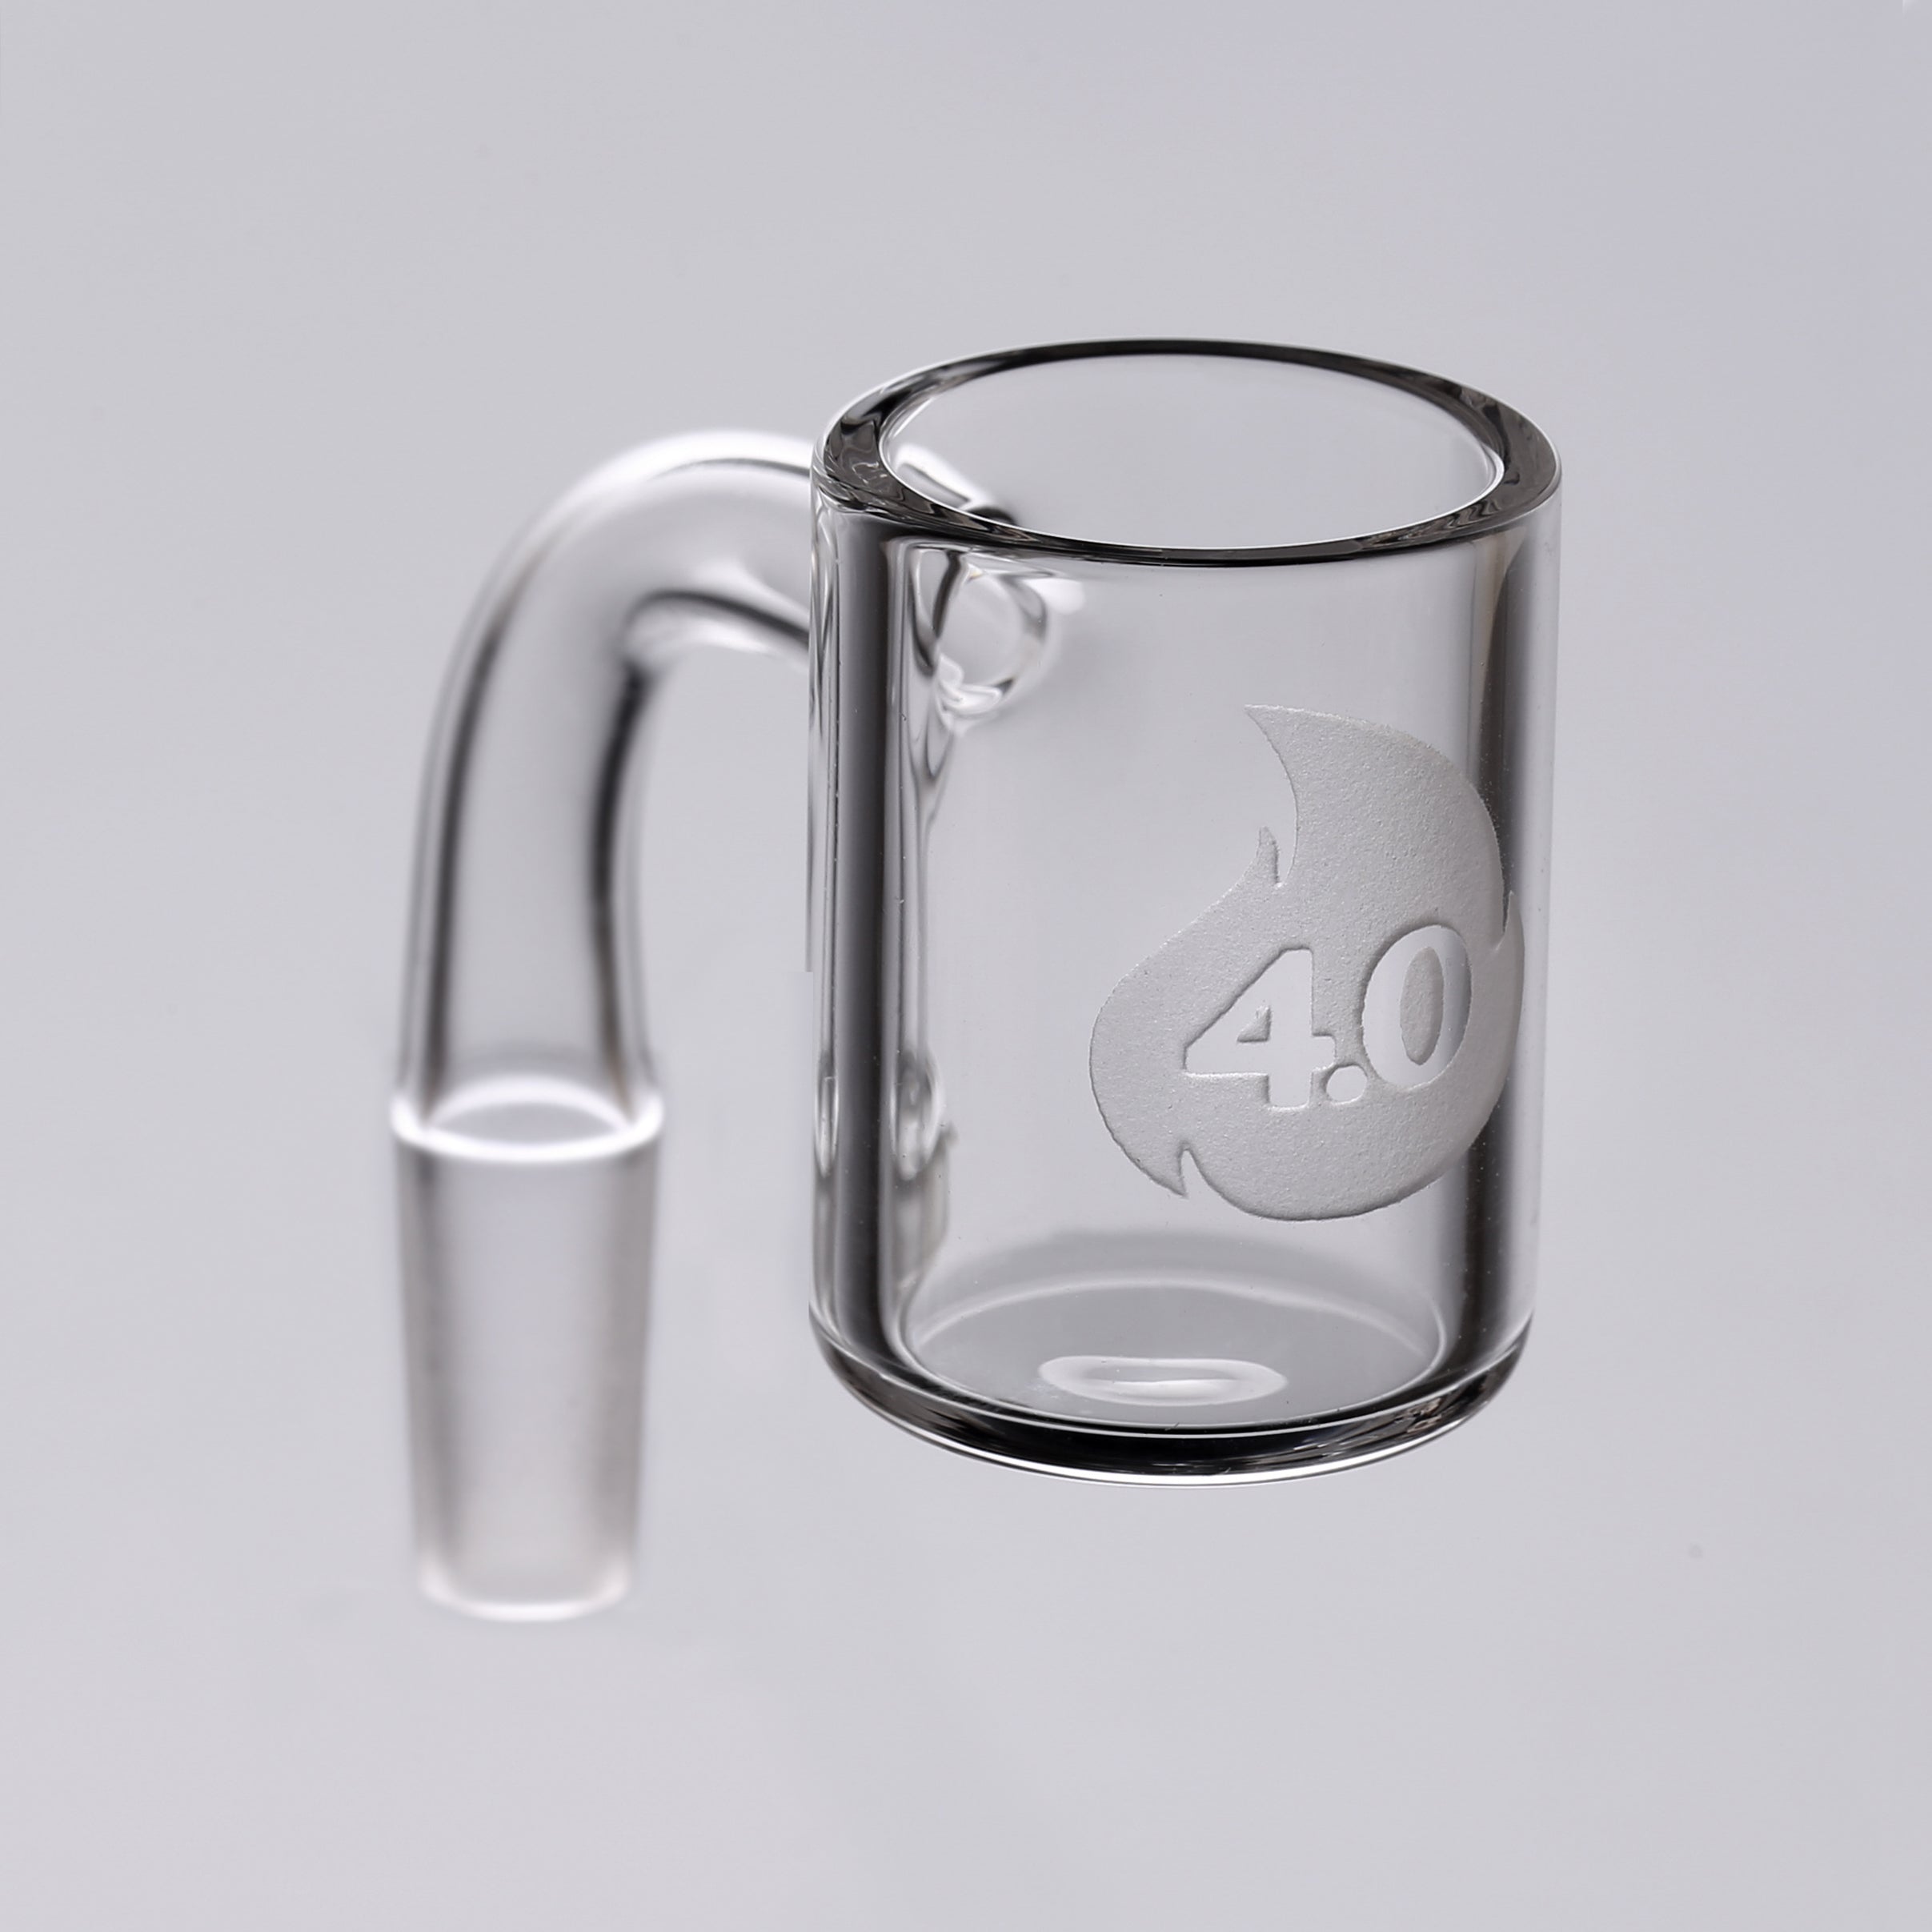 4.0 (Eric Ross) Quartz Cup Banger